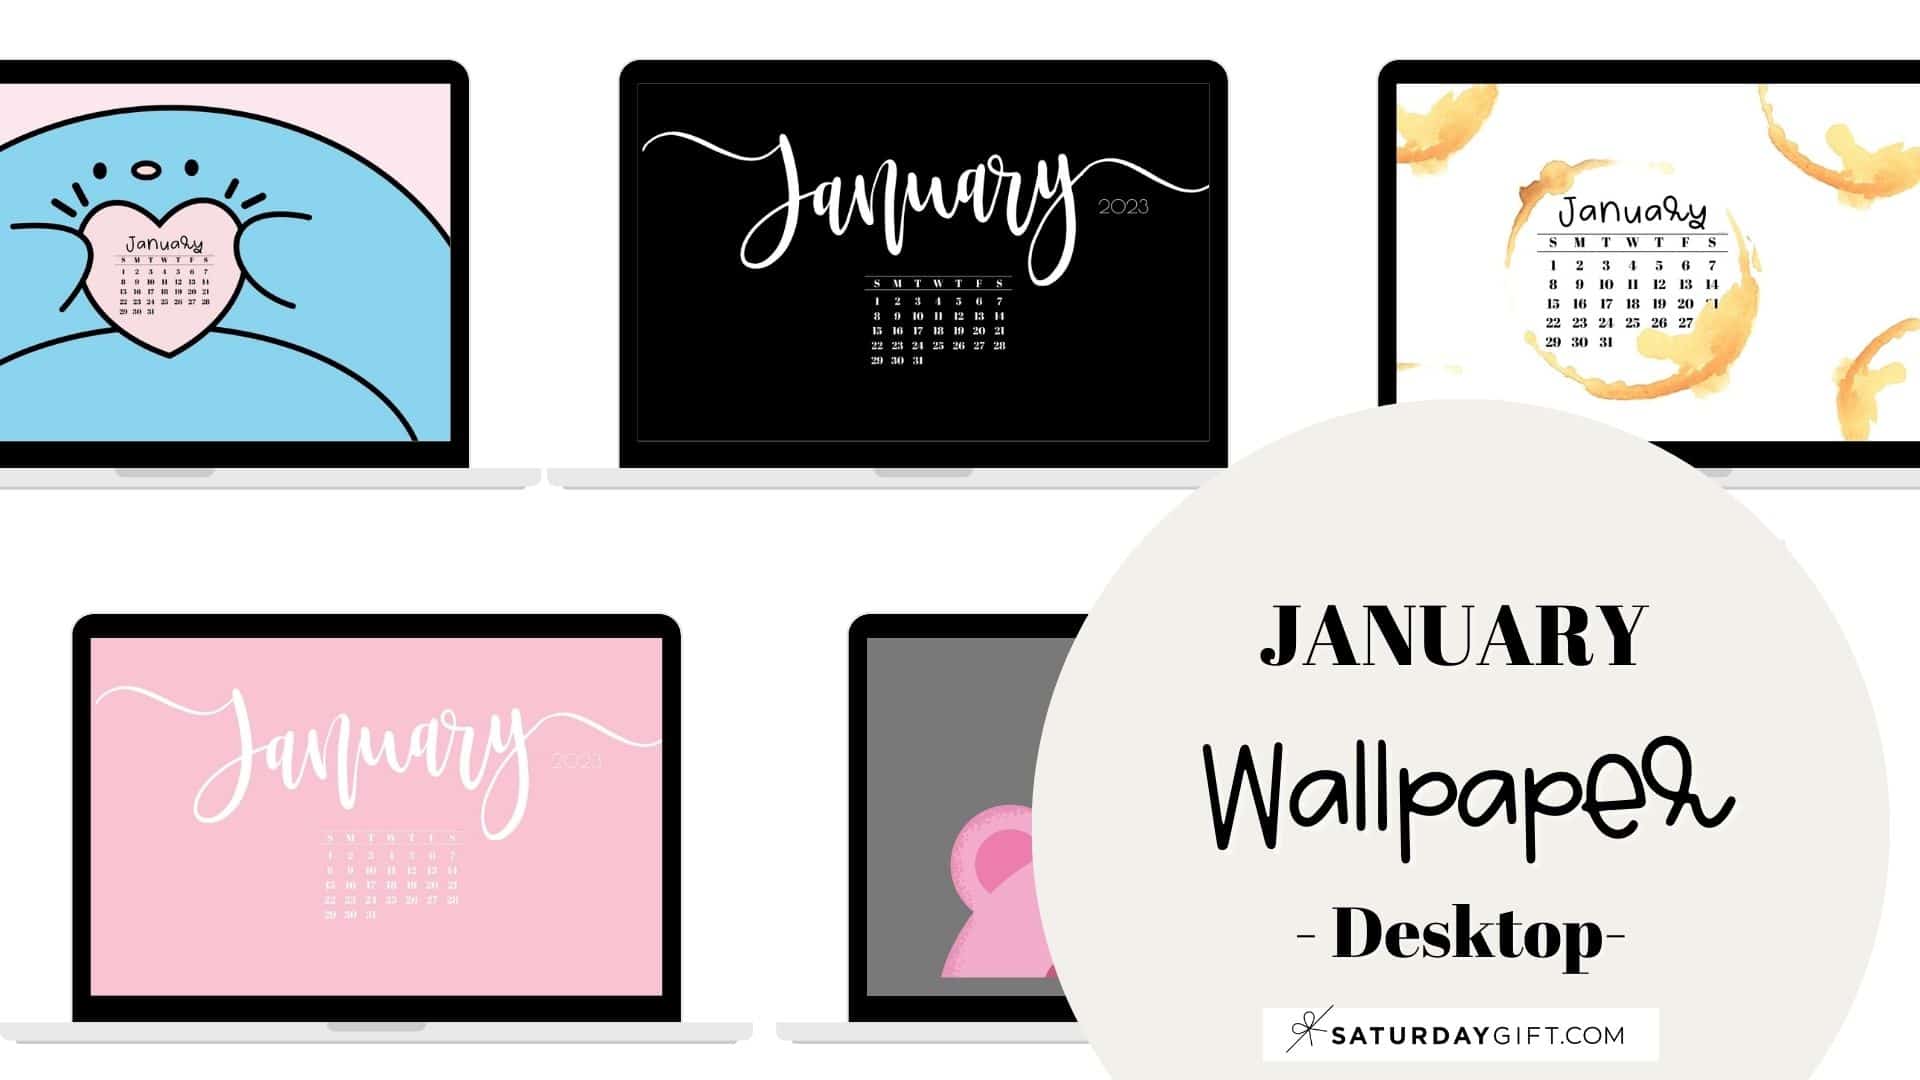 January desktop wallpaper